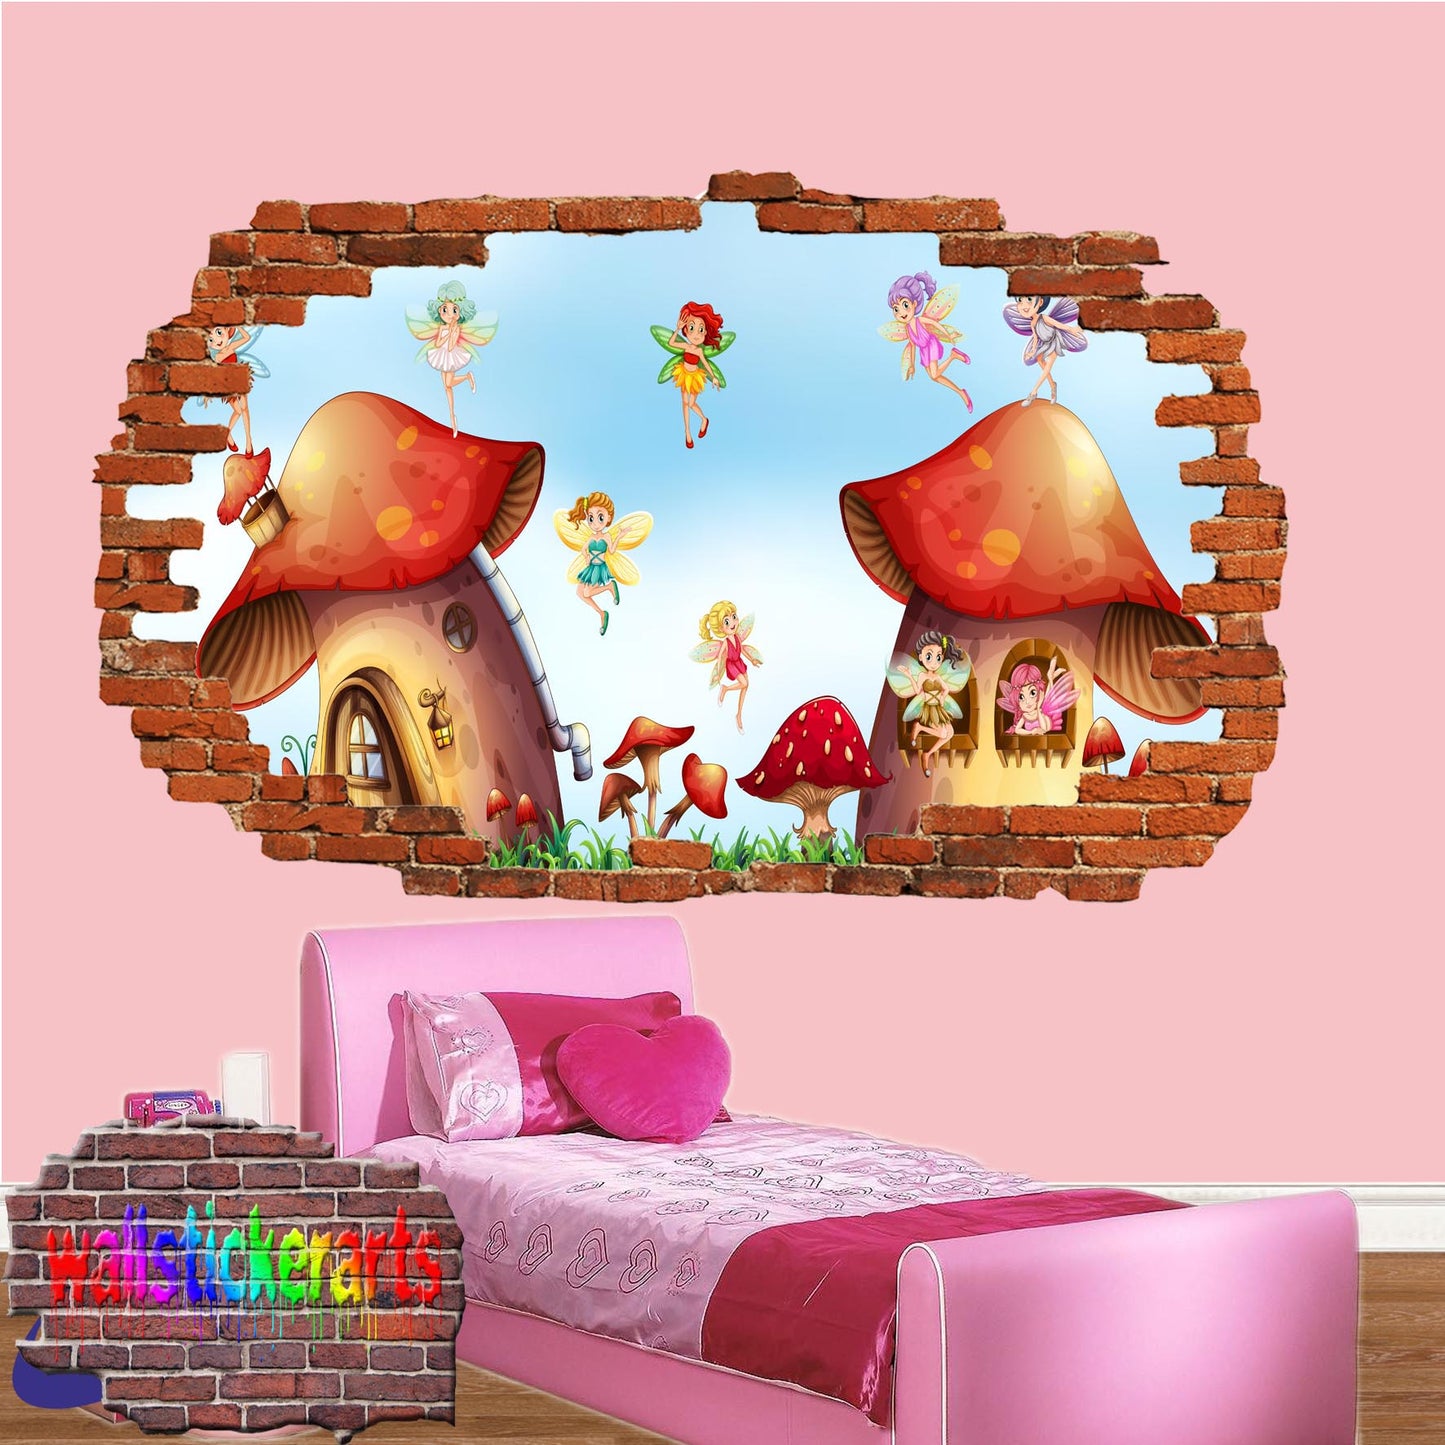 Little Fairies Mushroom Houses 3d Art Wall Sticker Girls Room Nursery Decor Decal Mural YS8